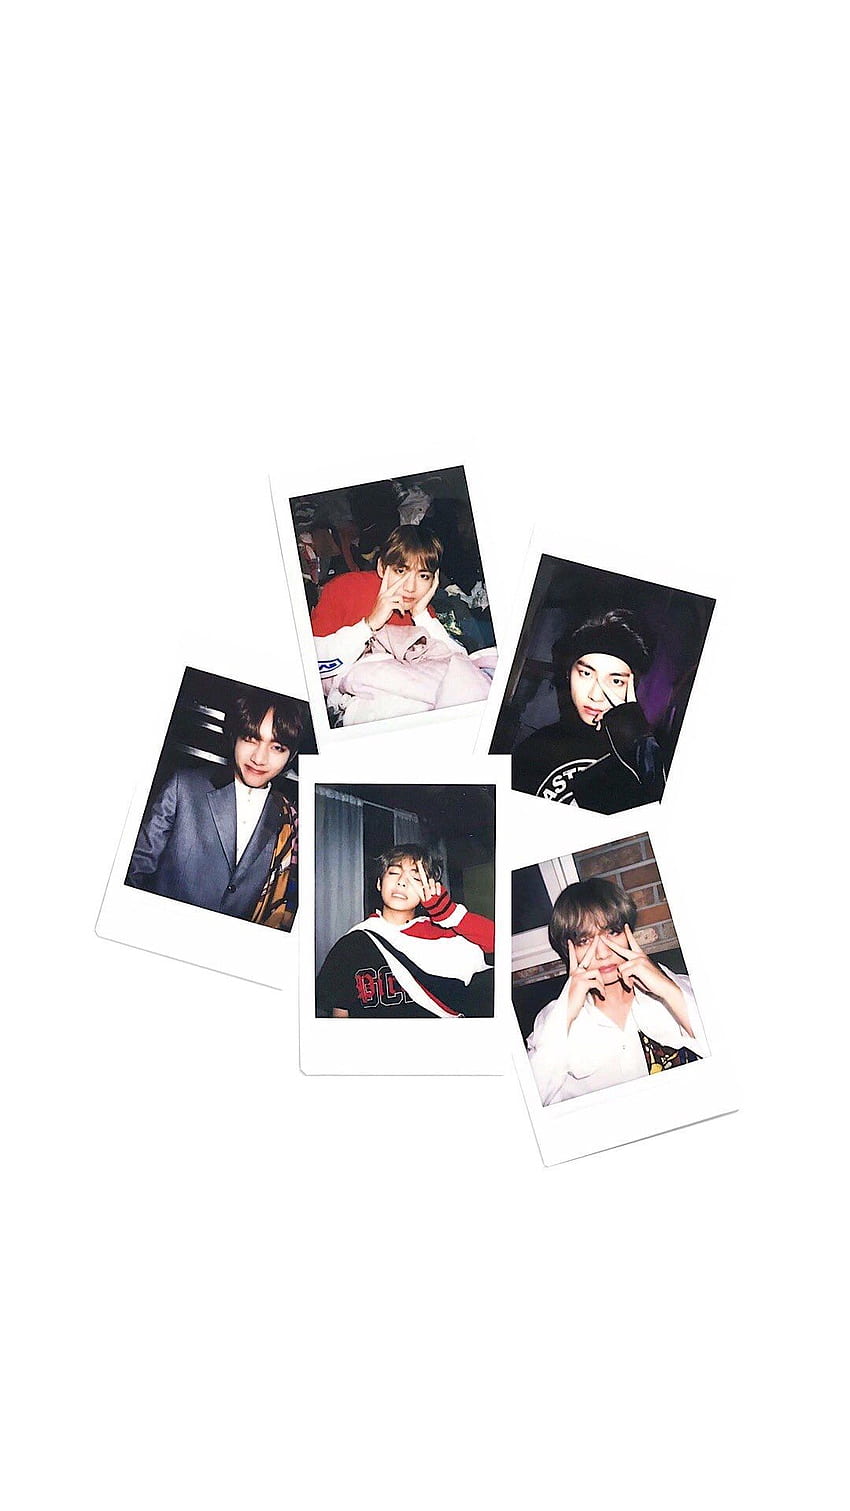 BTS Polaroid photo cards. - Polaroid